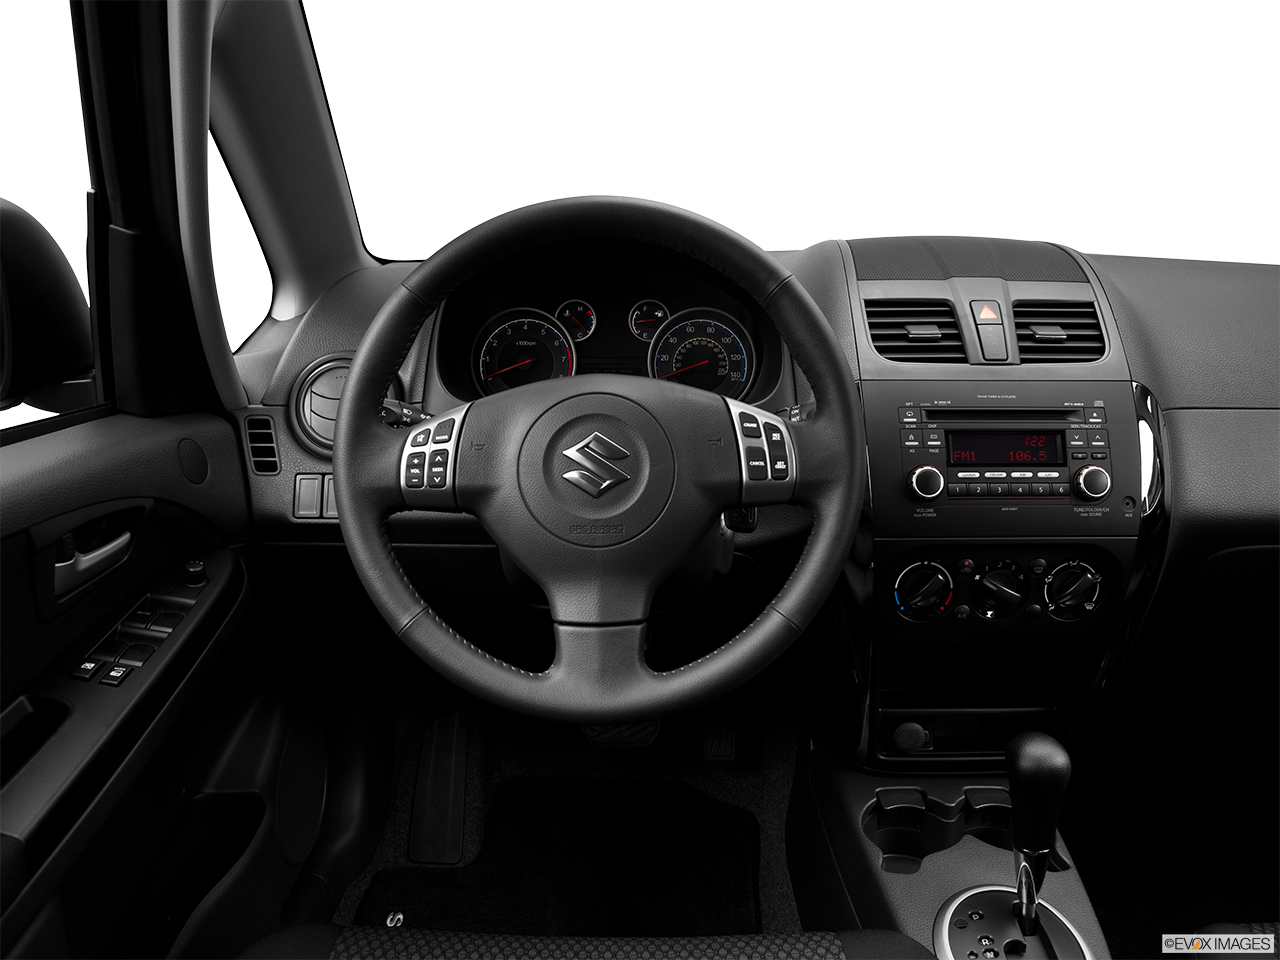 2013 Suzuki SX4 AWD Crossover Premium AT AWD Steering wheel/Center Console. 